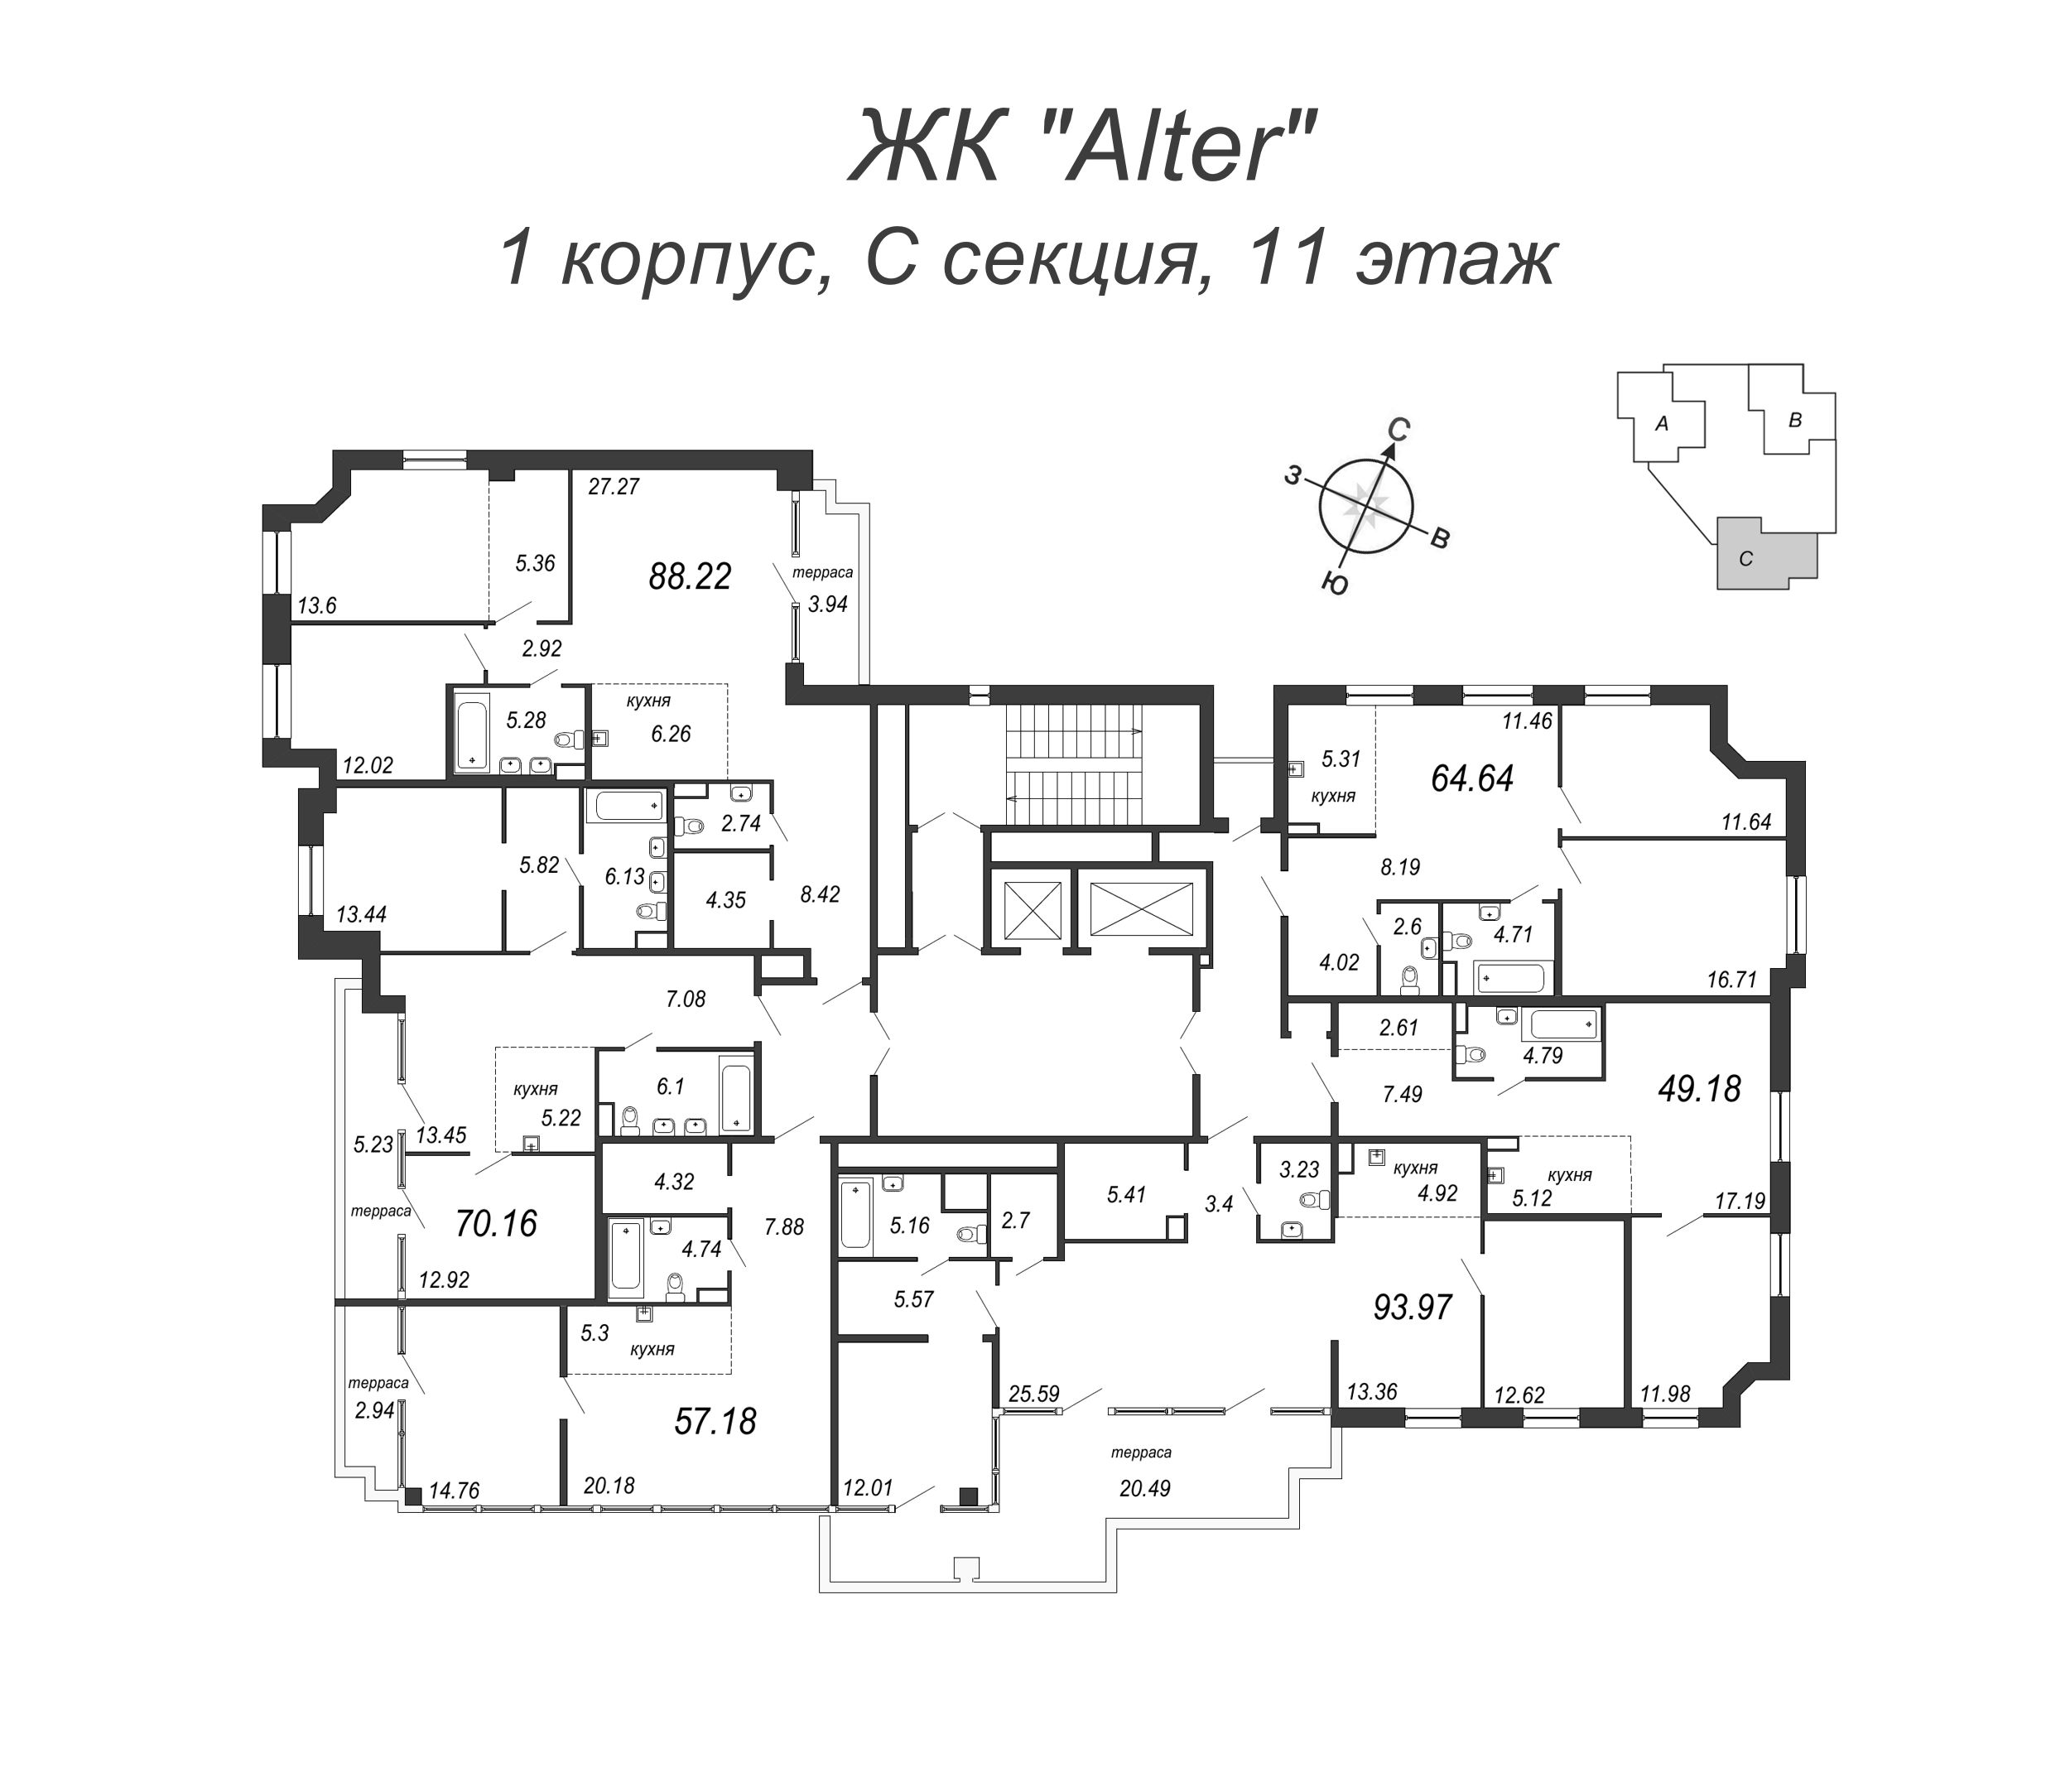 3-комнатная (Евро) квартира, 64.64 м² - планировка этажа